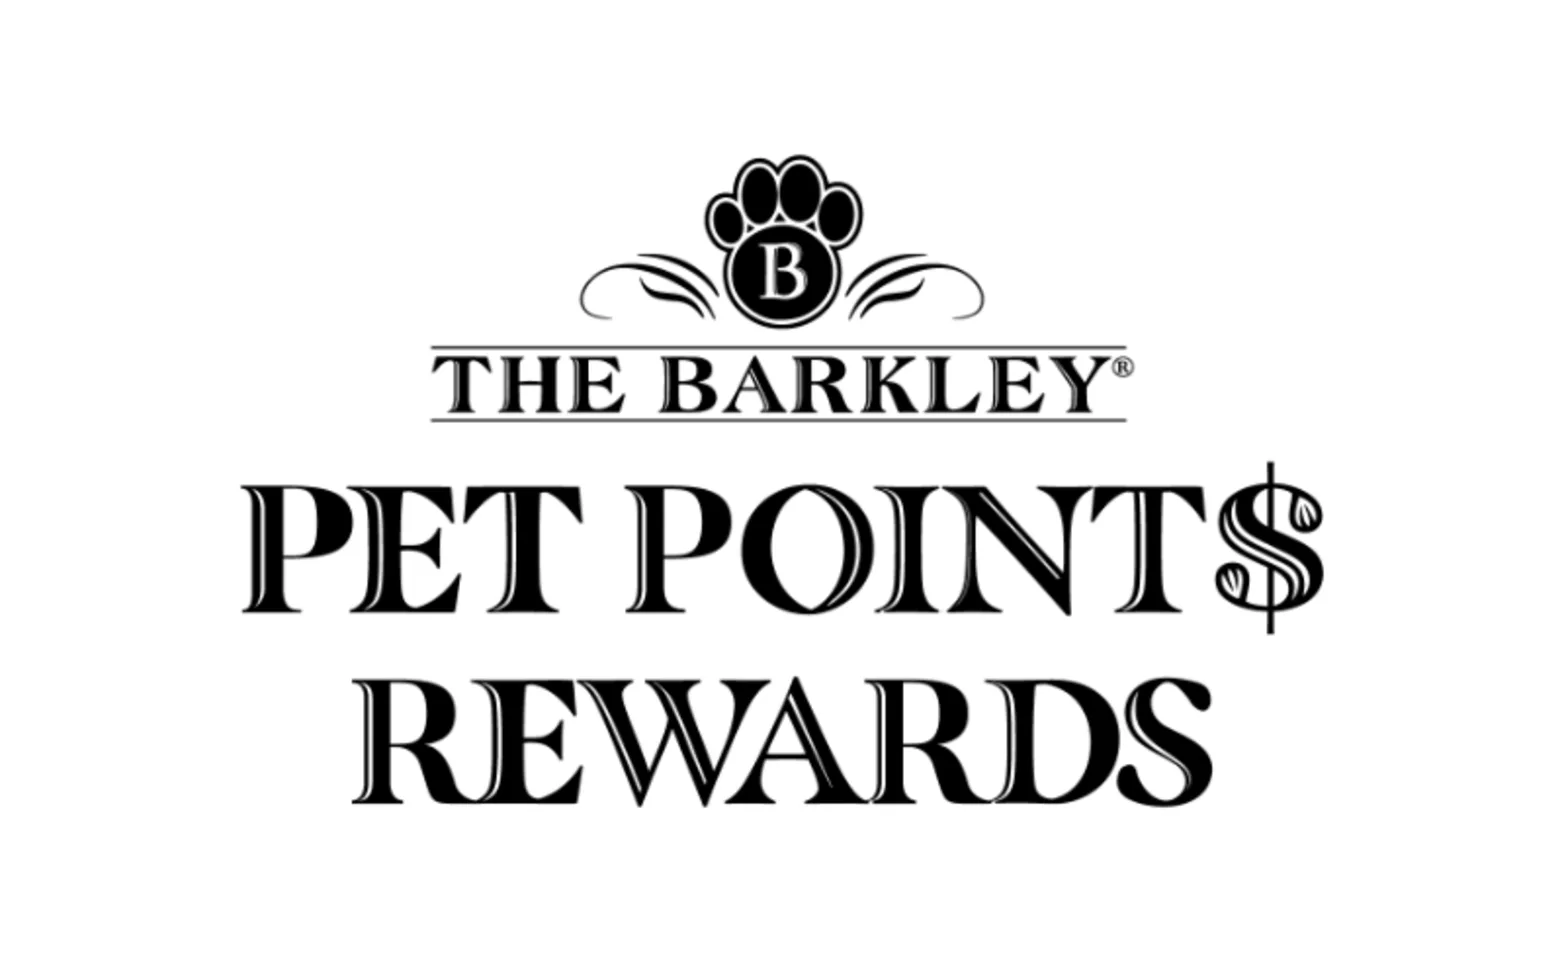 The Barkley Loyalty Rewards